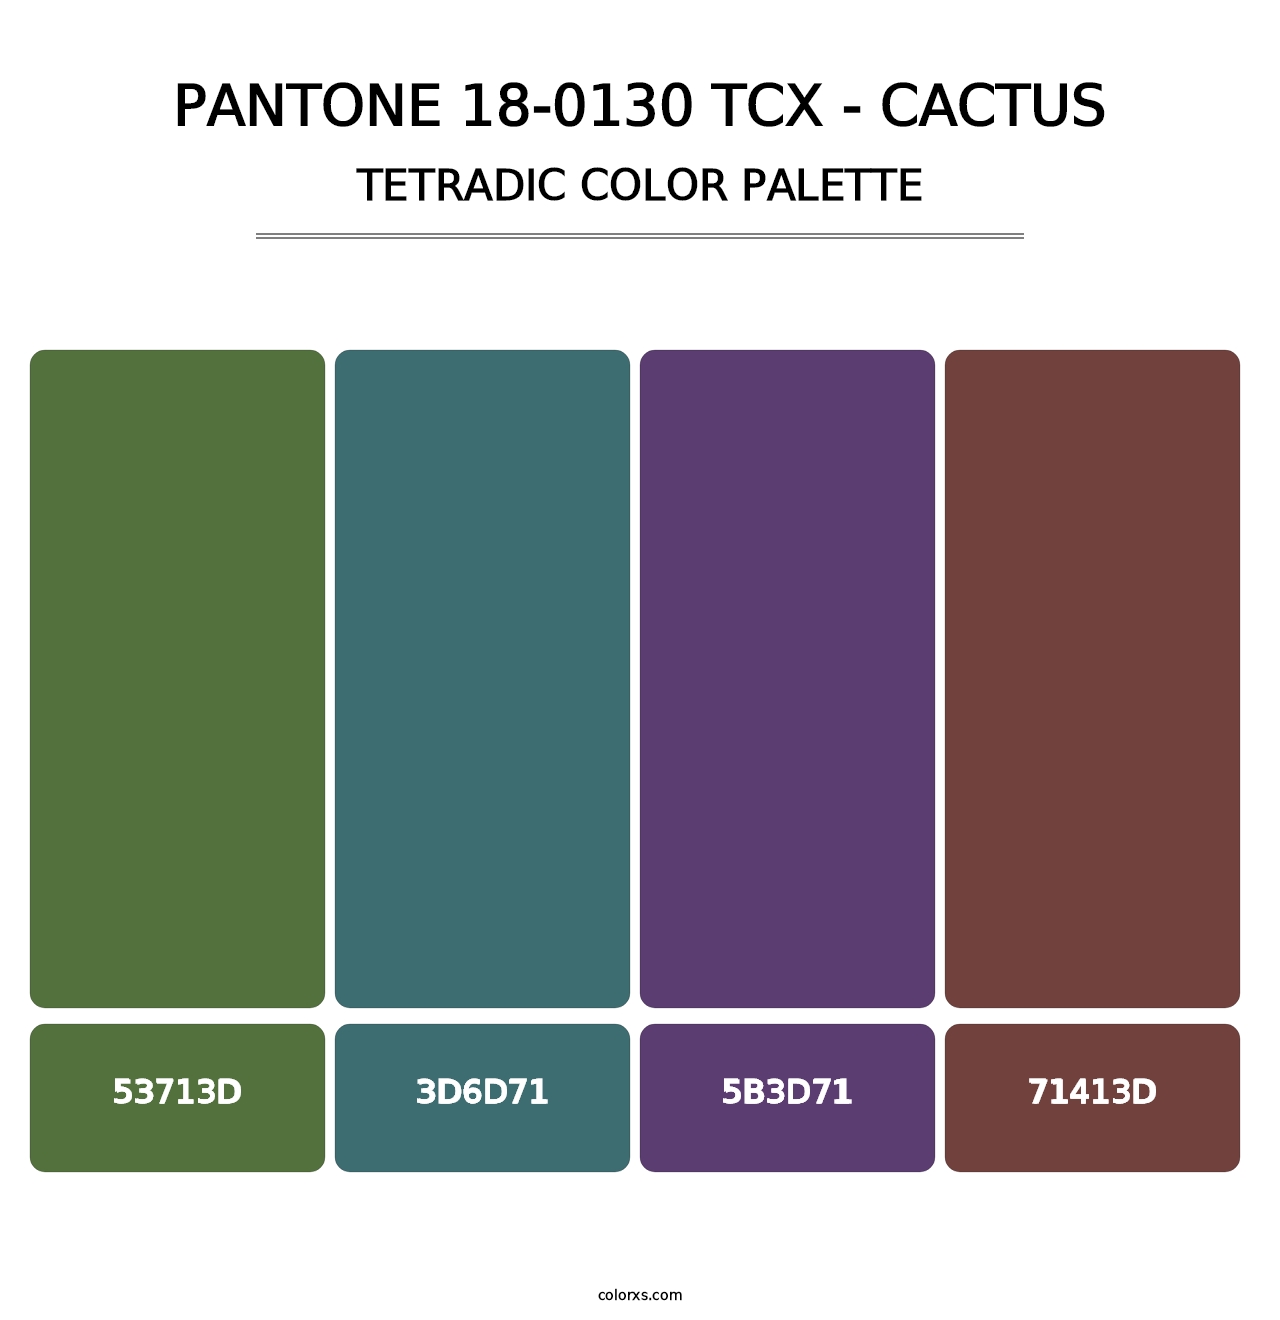 PANTONE 18-0130 TCX - Cactus - Tetradic Color Palette